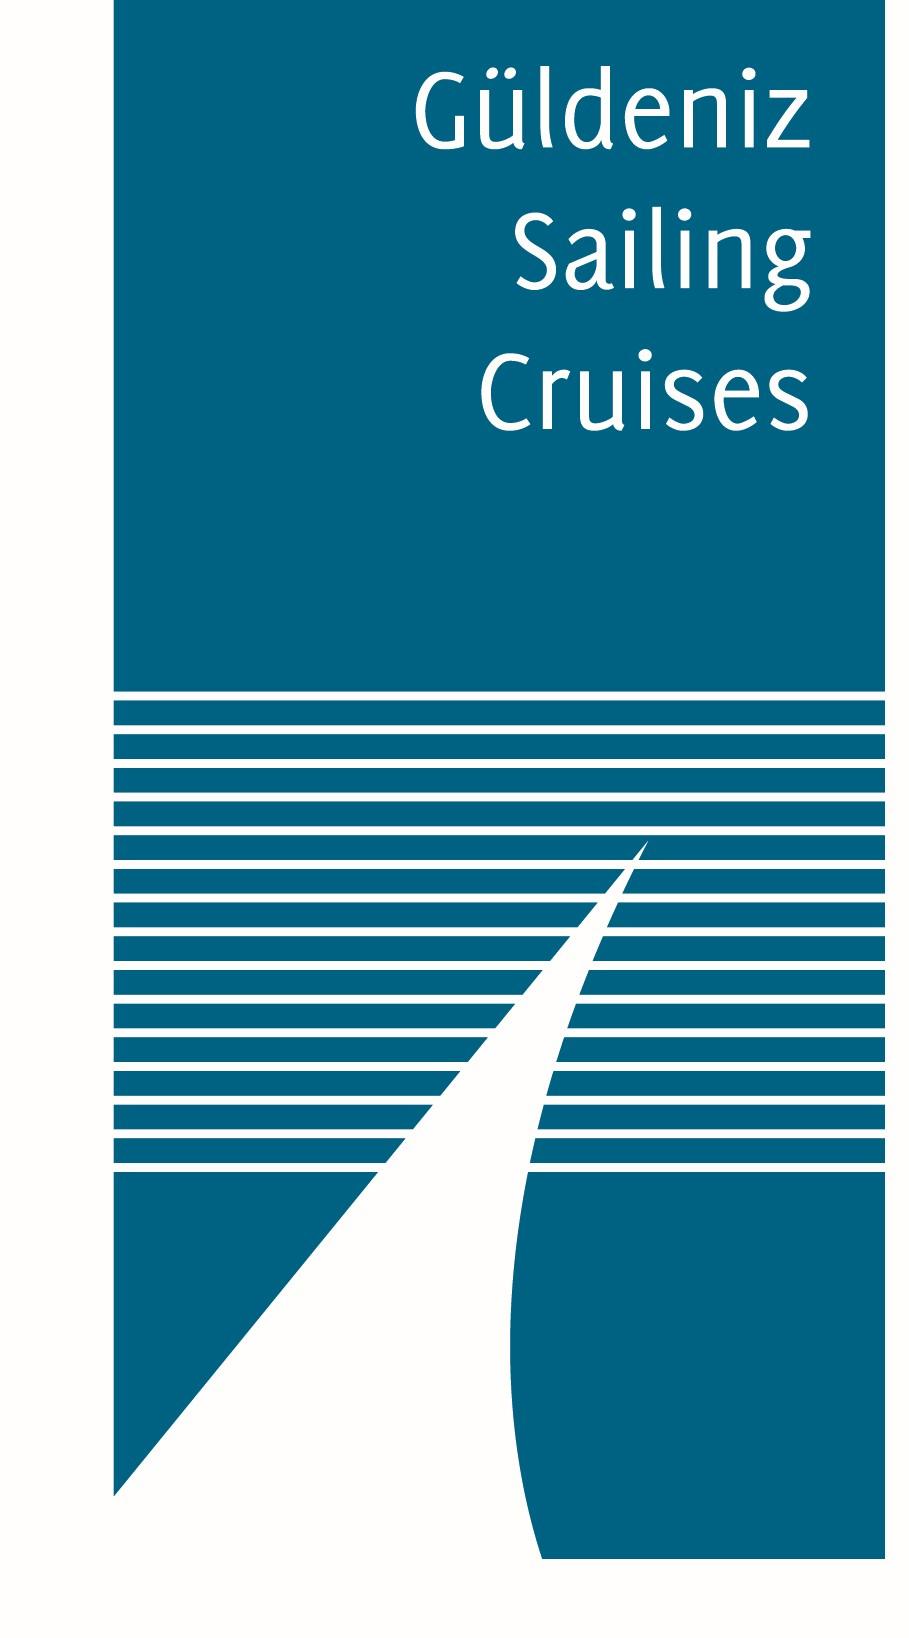 Artikel 1 Inleidende bepaling Algemene Reisvoorwaarden Güldeniz Sailing Cruises 2017 Güldeniz Sailing Cruises ltd. te Bodrum, Turkije is de reisorganisator.